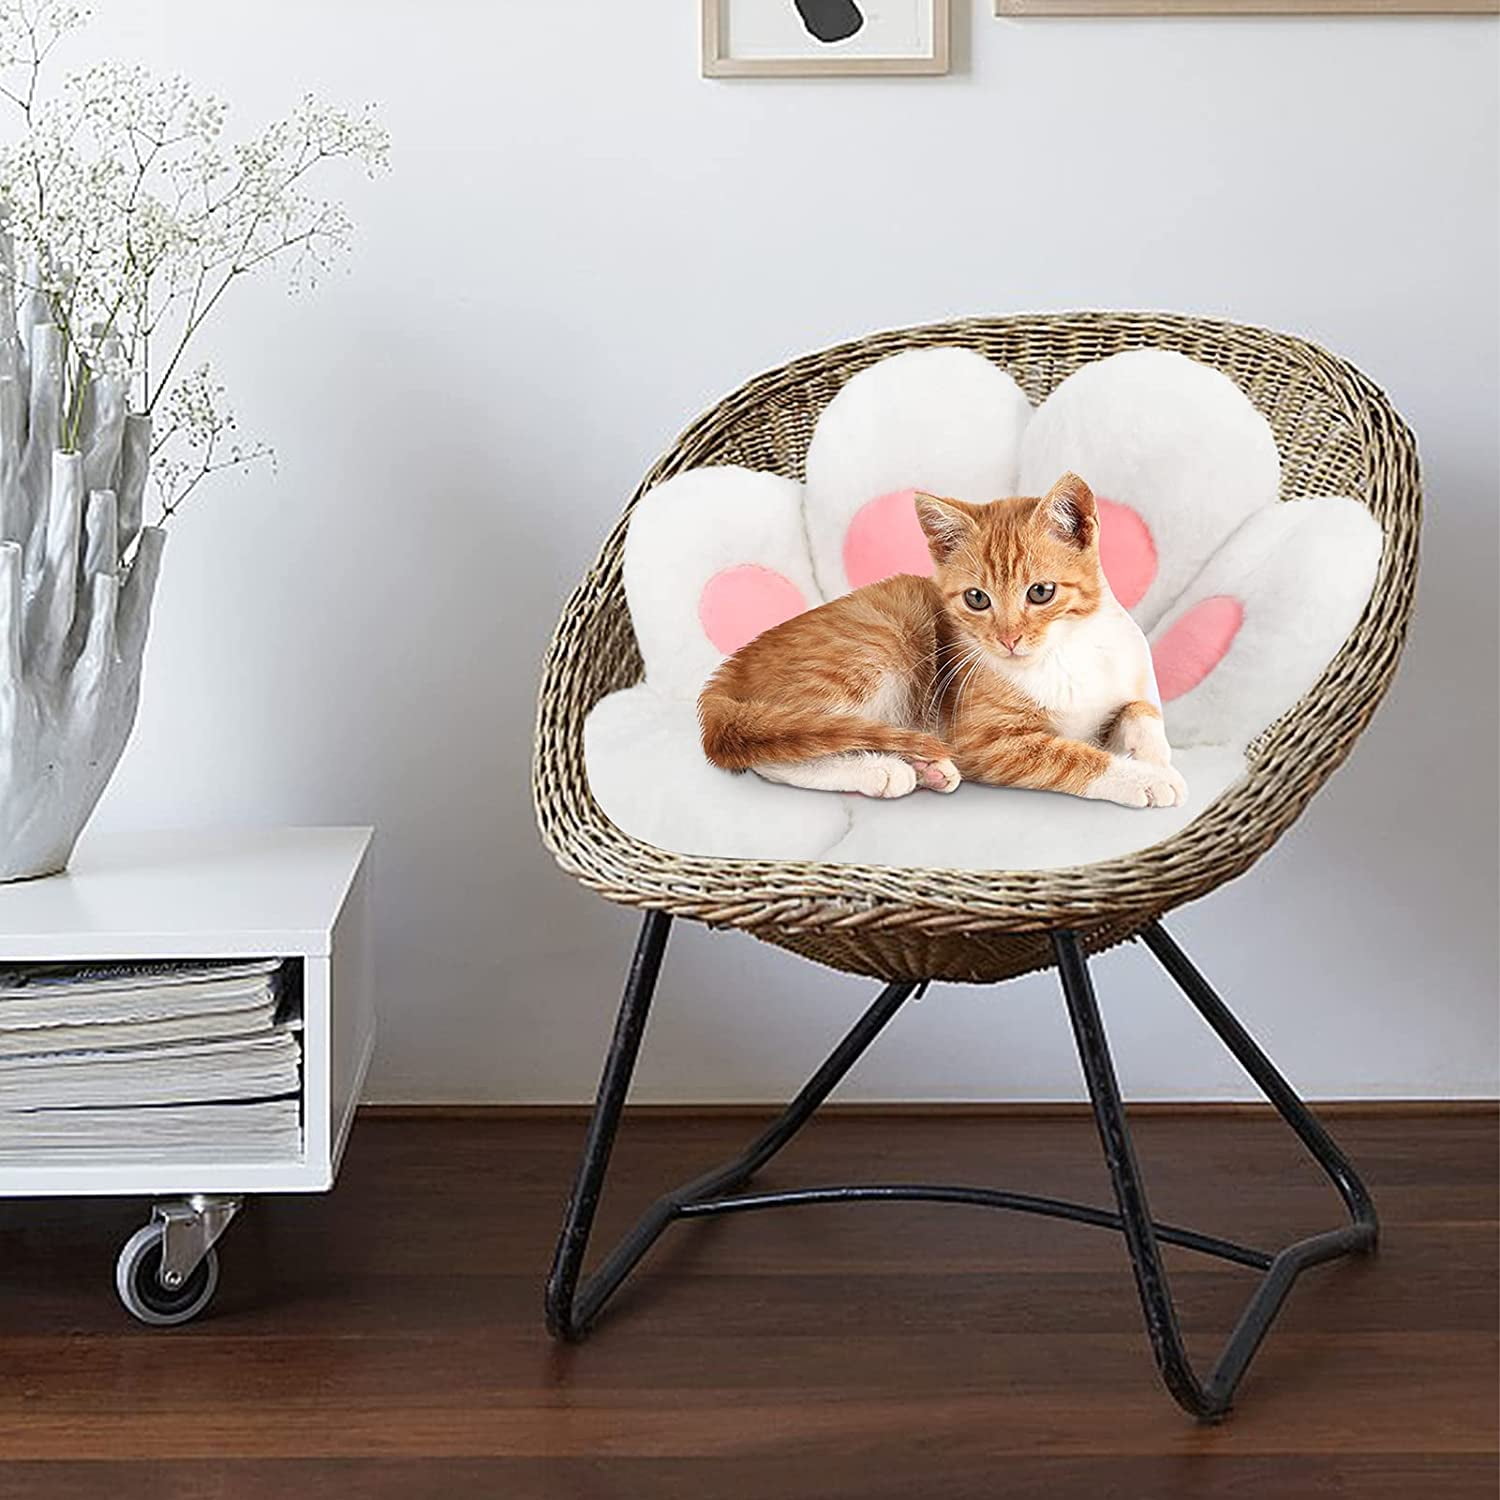 Cat Paw Cushion- Kawaii Cozy Cute Seat Cushion, Cat Paw Shape